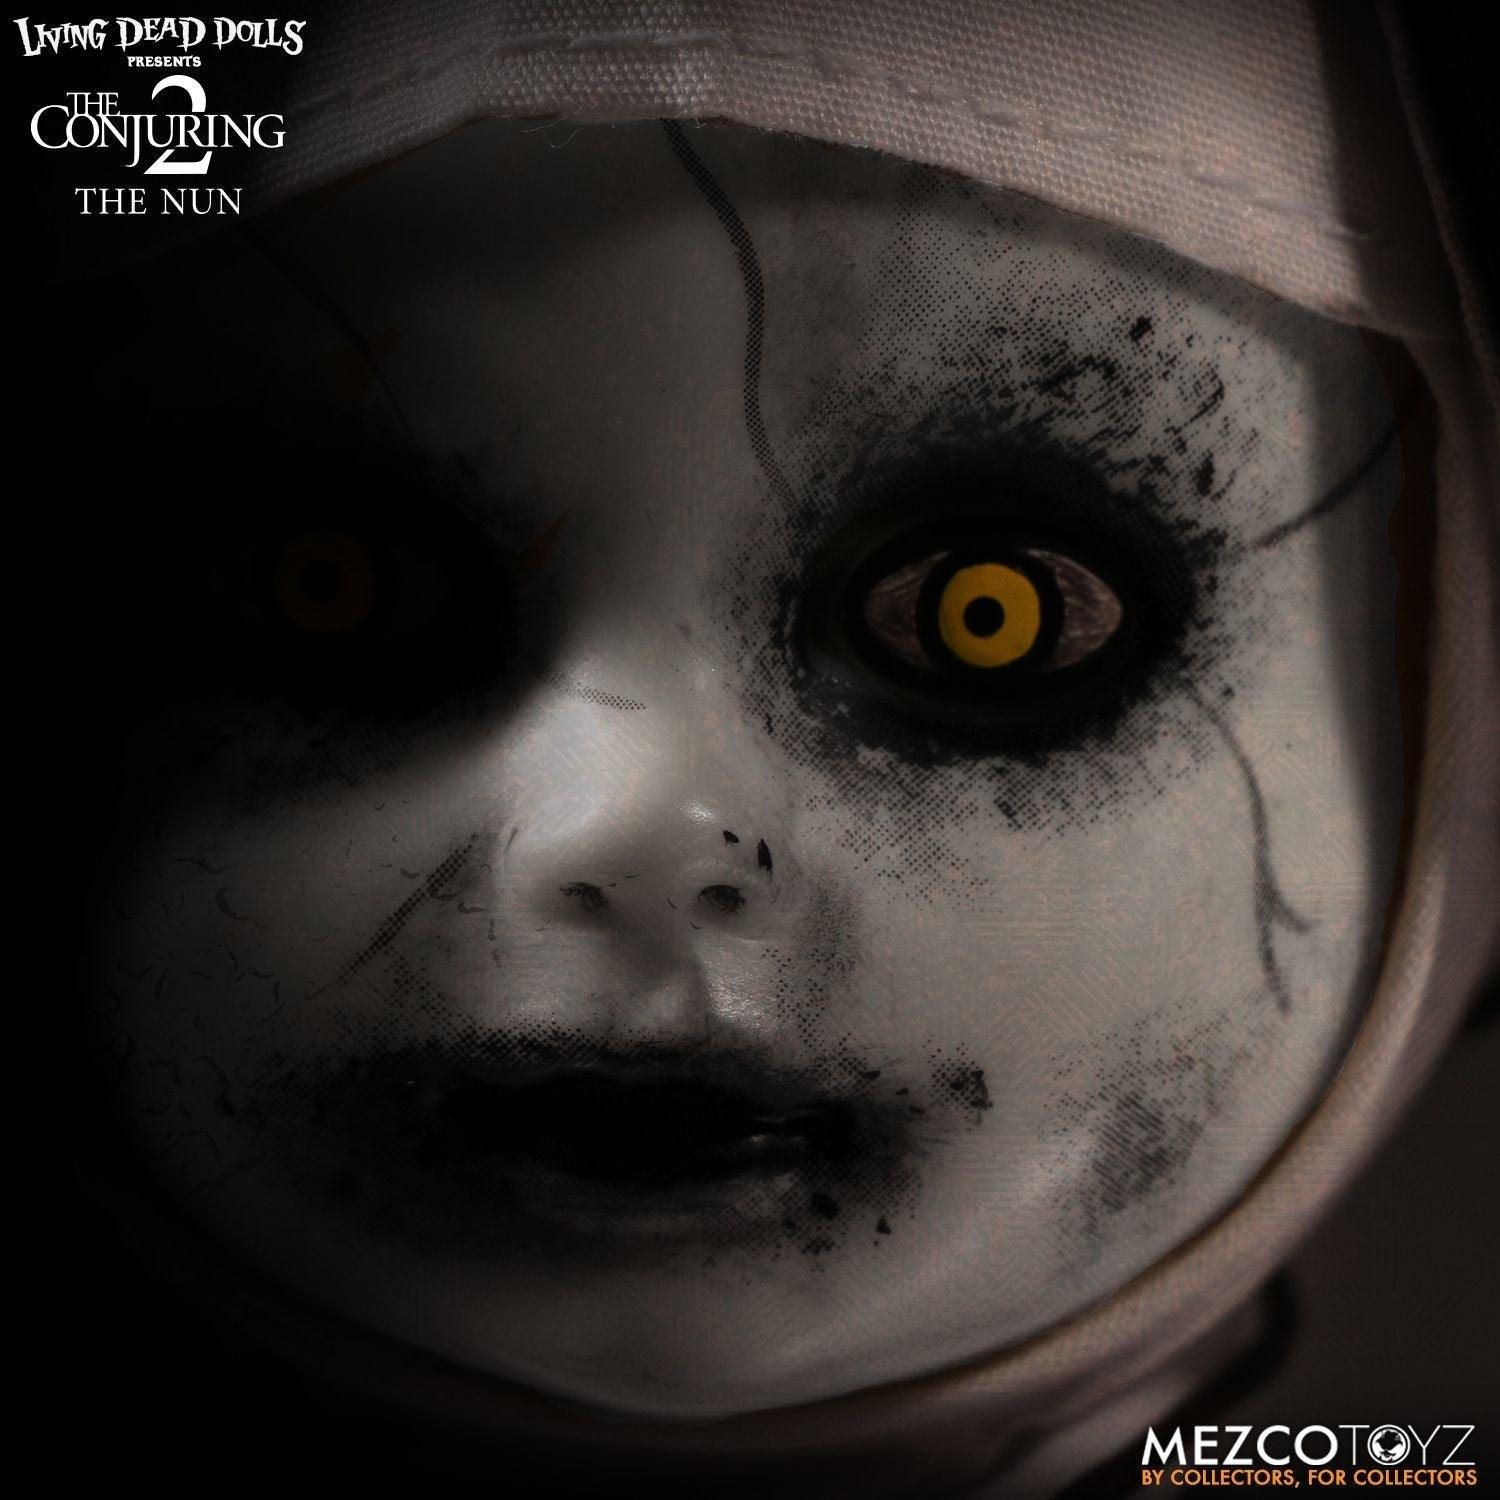 MEZ99410 Living Dead Dolls - The Conjuring: The Nun - Mezco Toyz - Titan Pop Culture